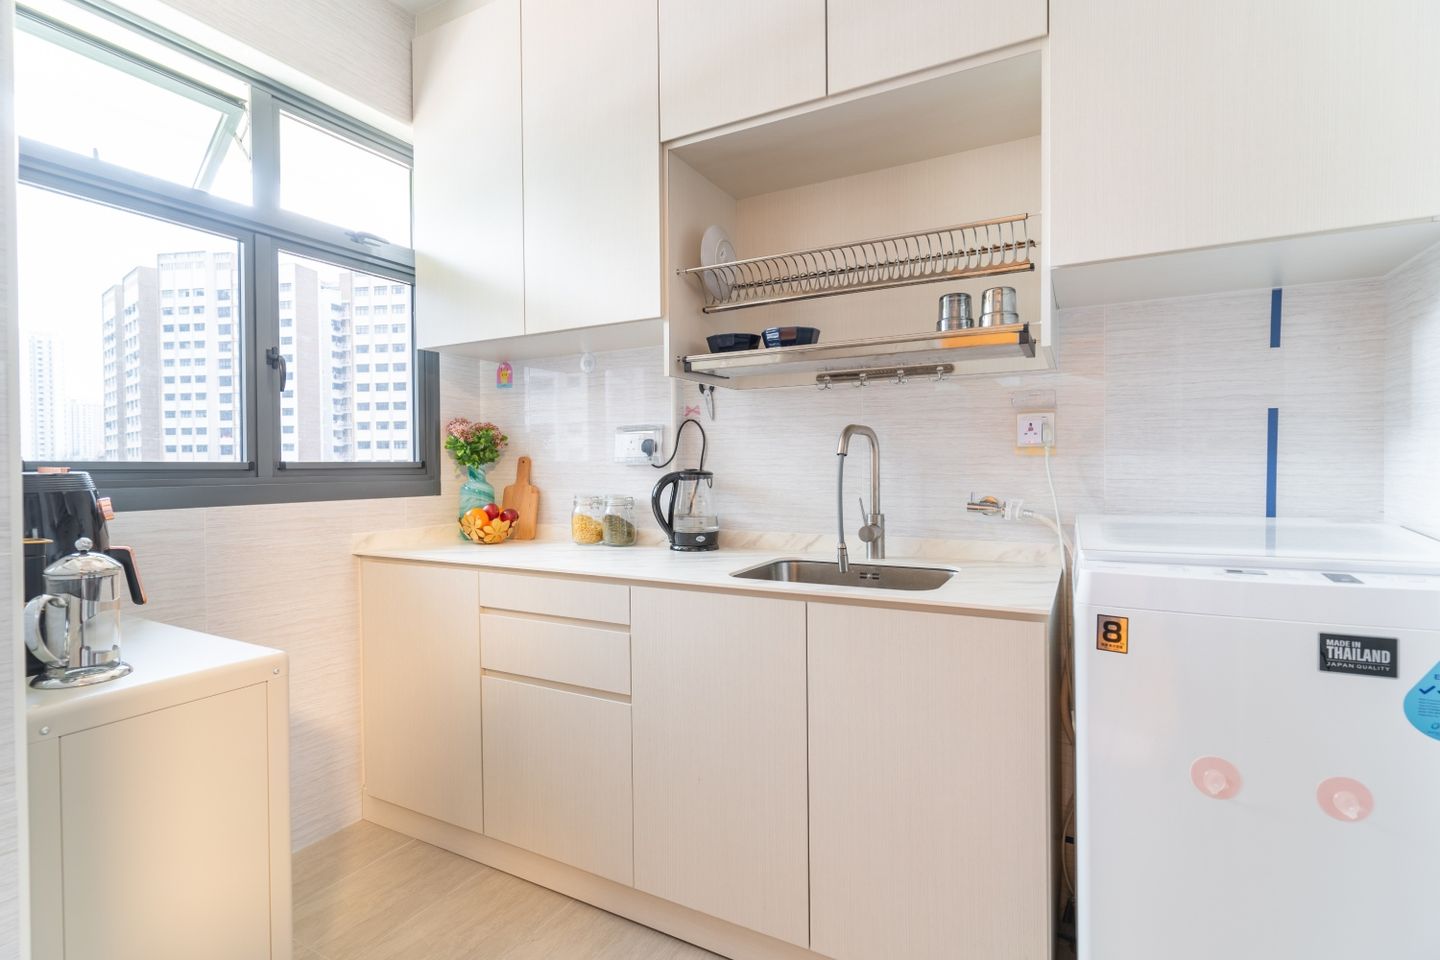 All-White Scandinavian Interior Design For Kitchens - Livspace